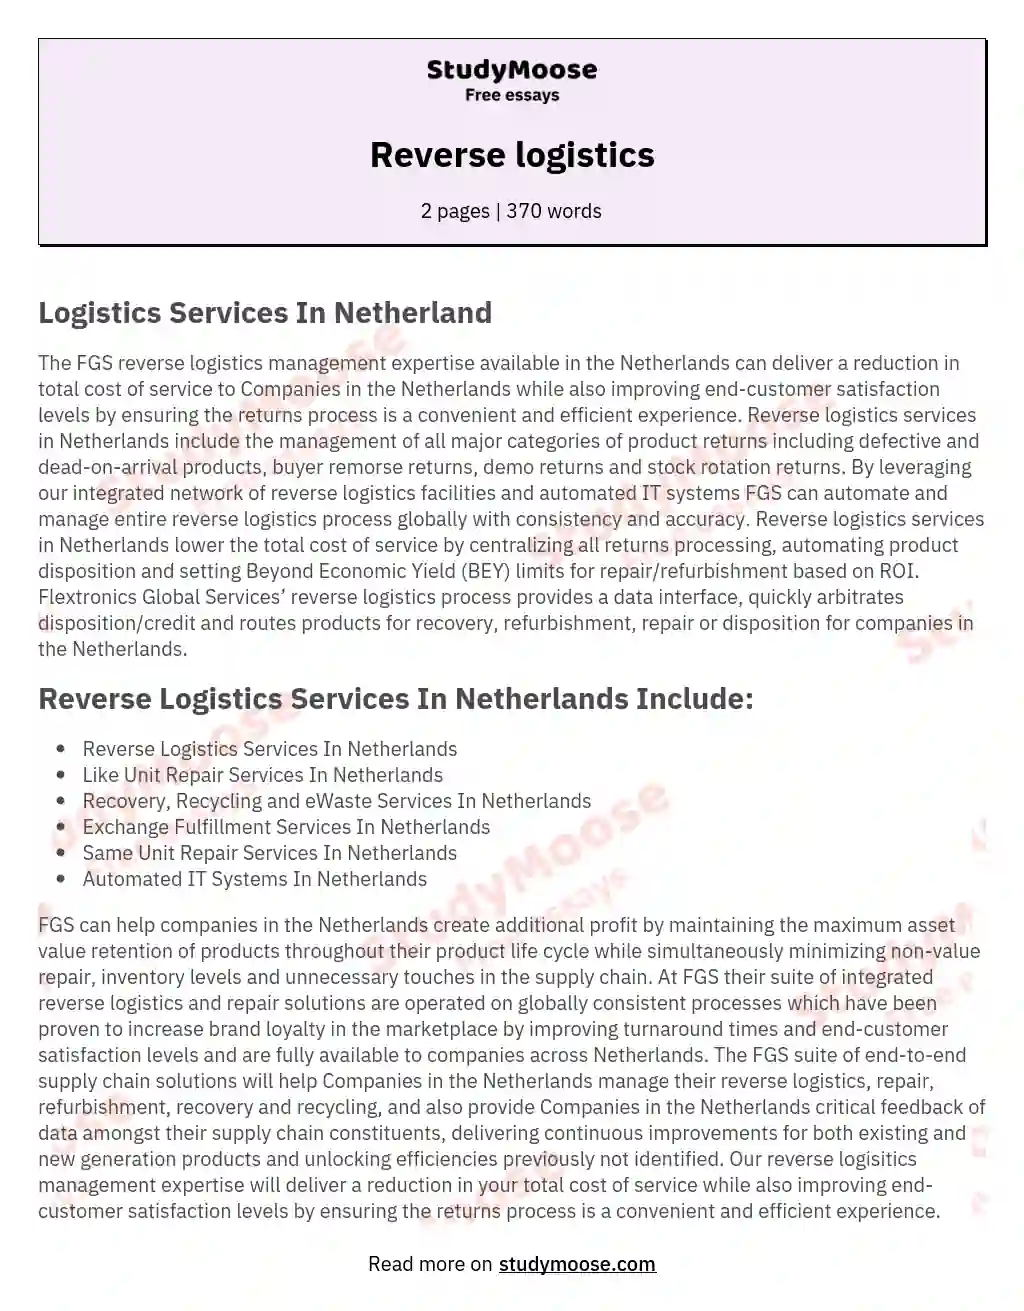 Reverse logistics essay